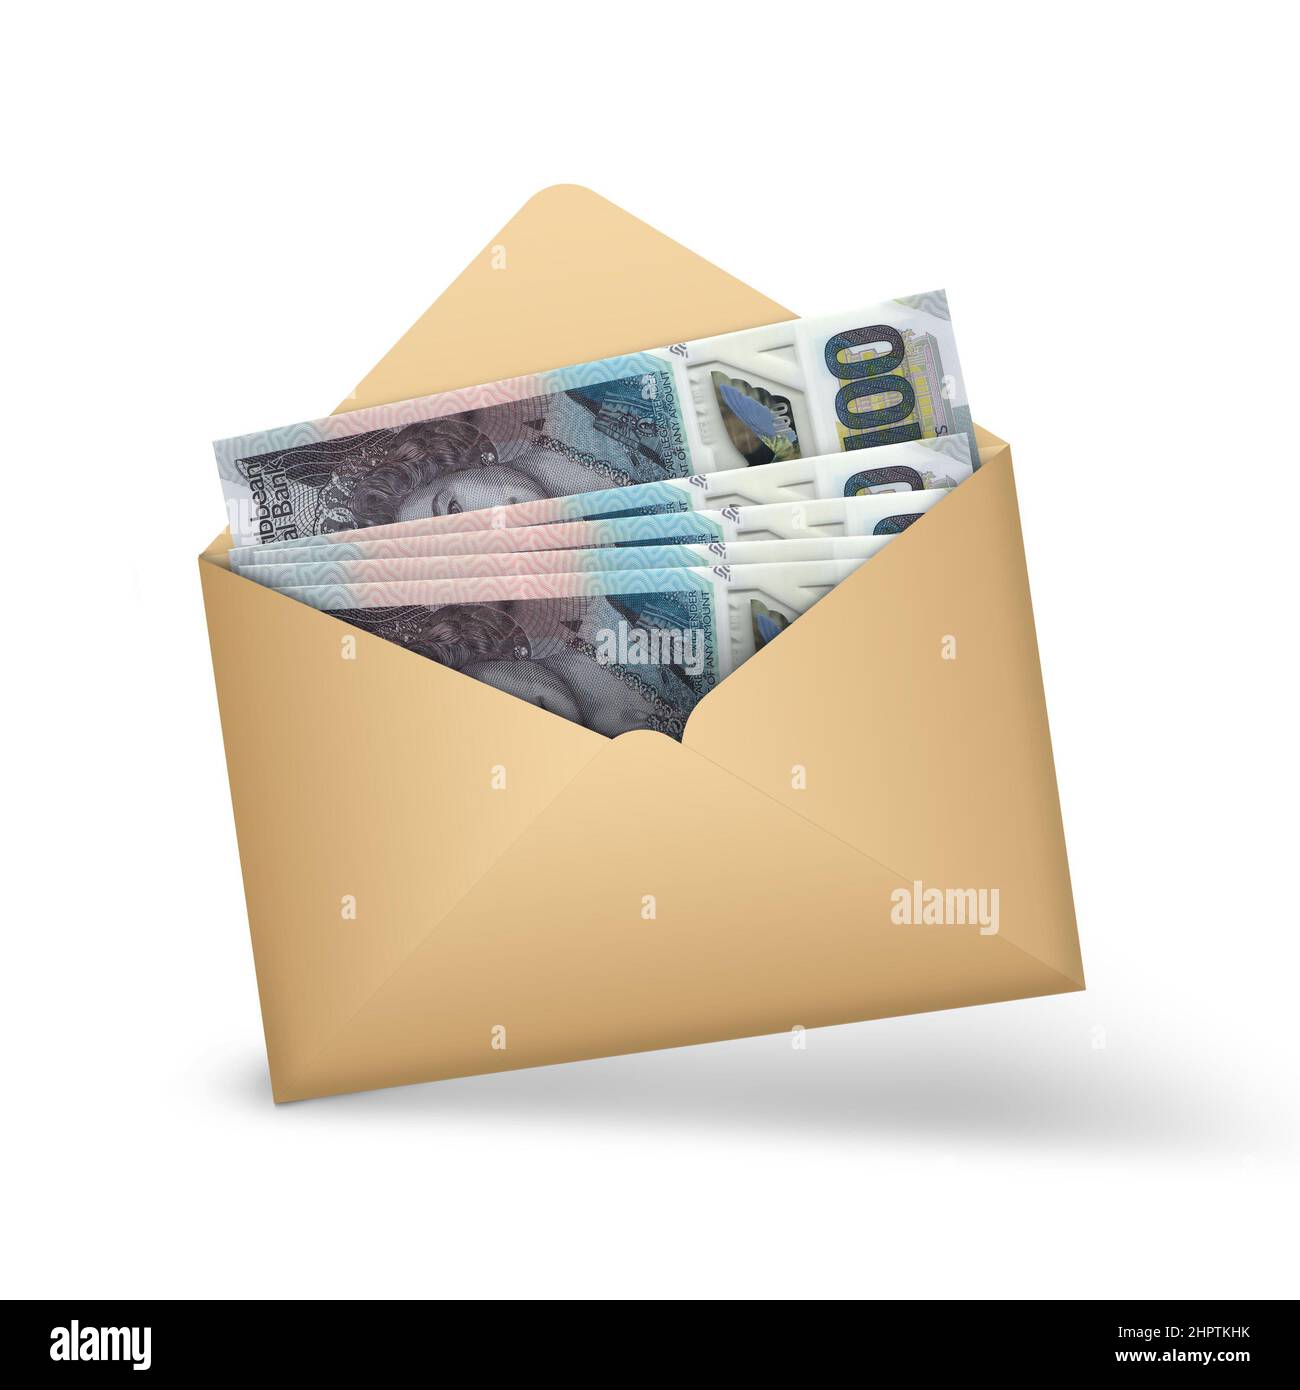 Eastern Caribbean dollar notes inside an open brown envelope. 3D illustration of money in an open envelope Stock Photo